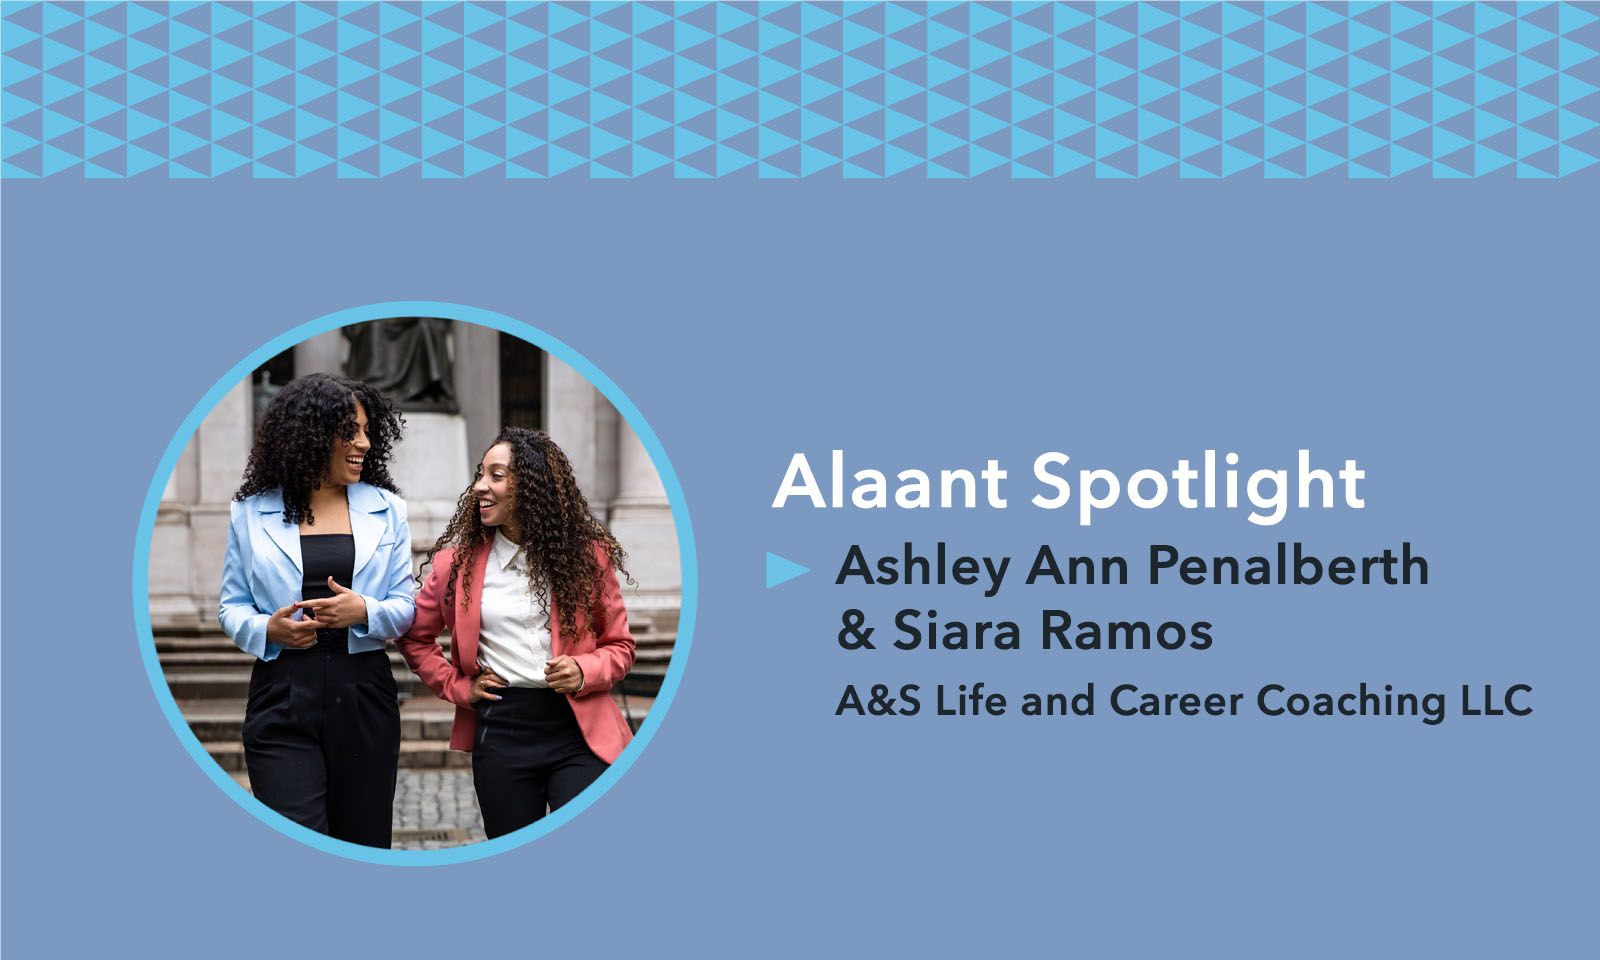 Alaant Spotlight A&S Life and Career Coaching LLC 